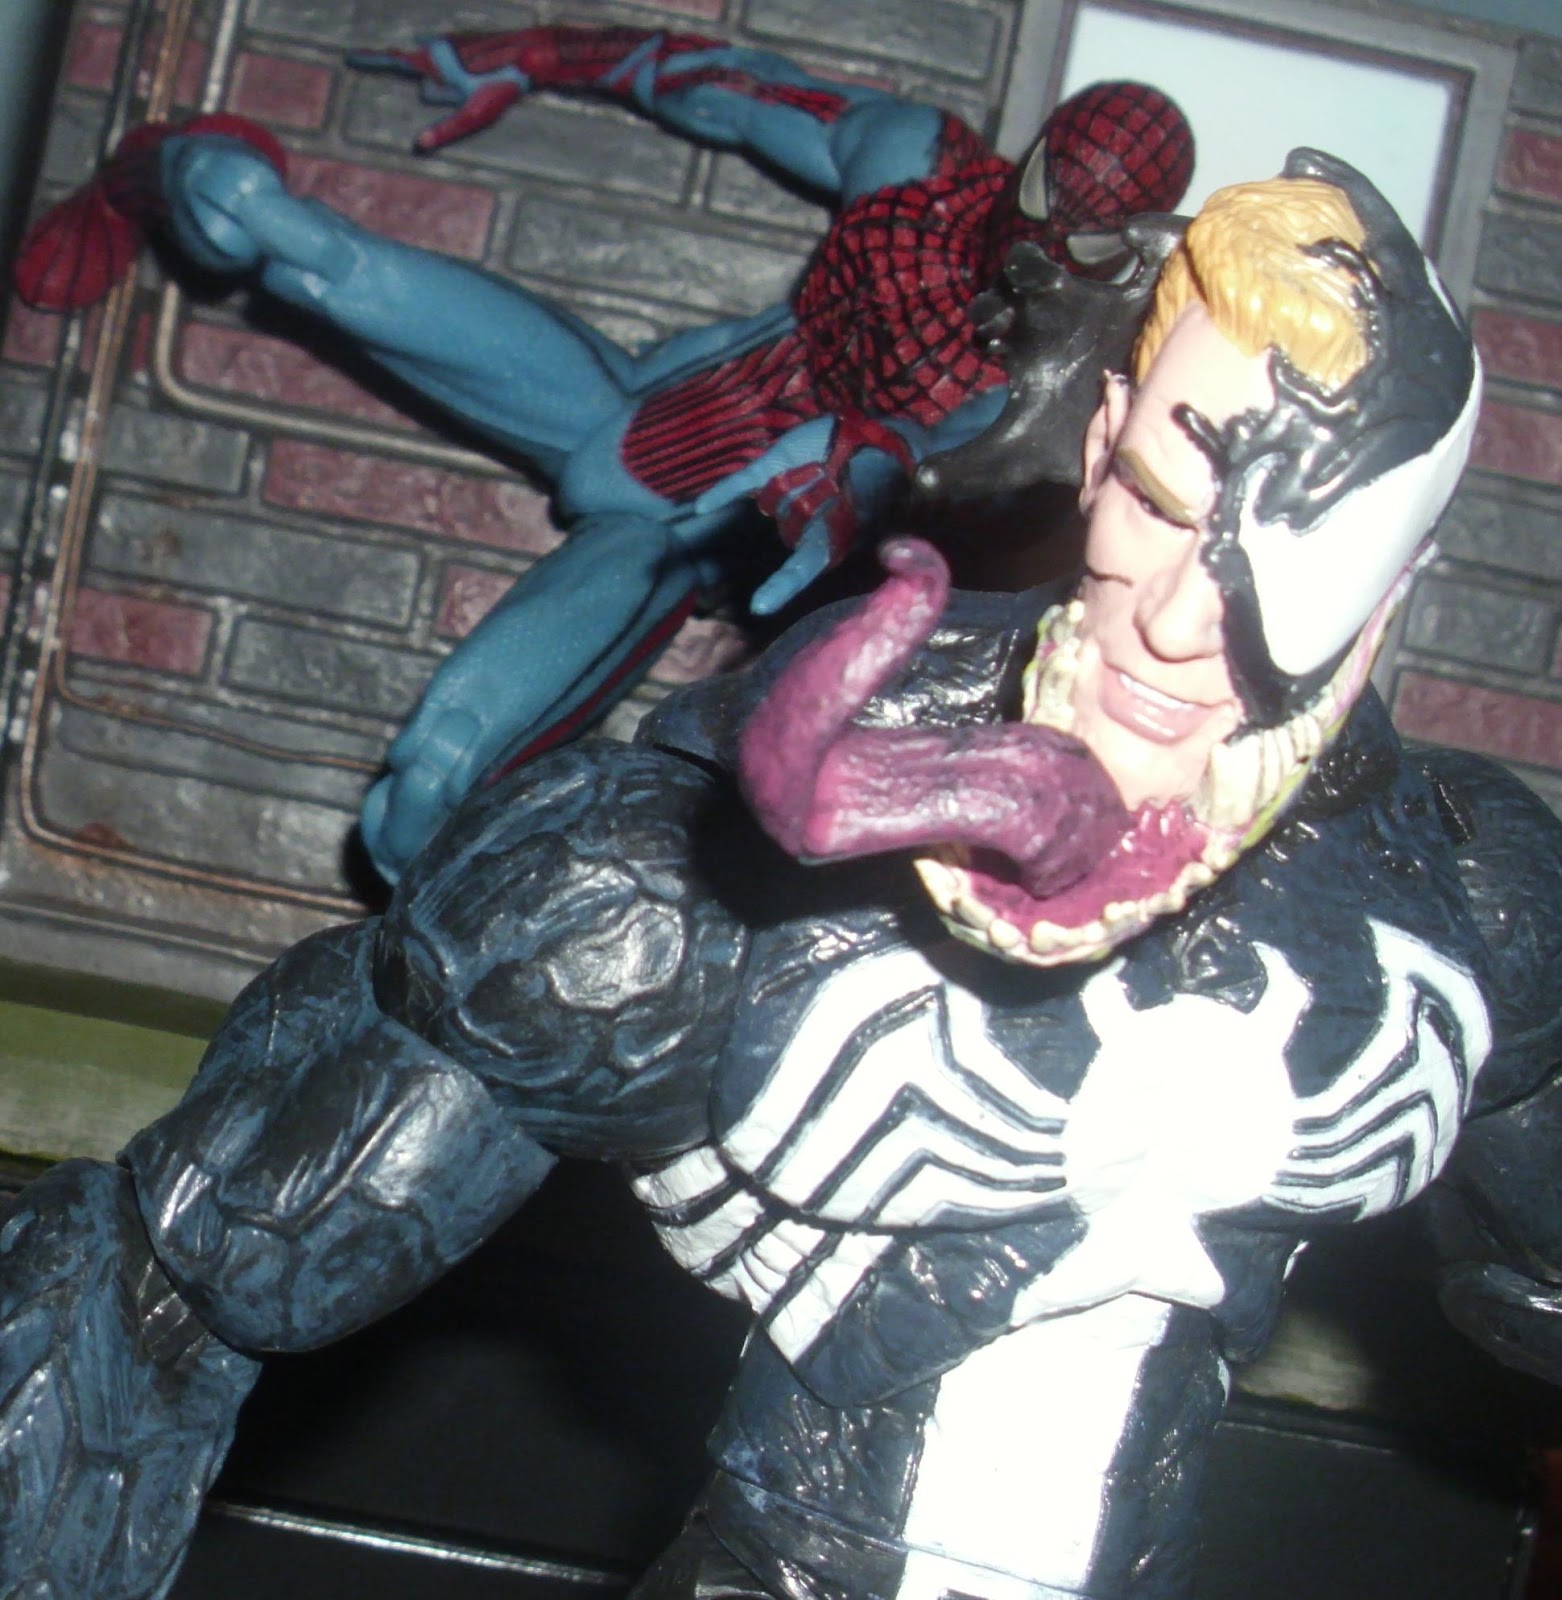 Geek4Life Review of Marvel Select Venom!